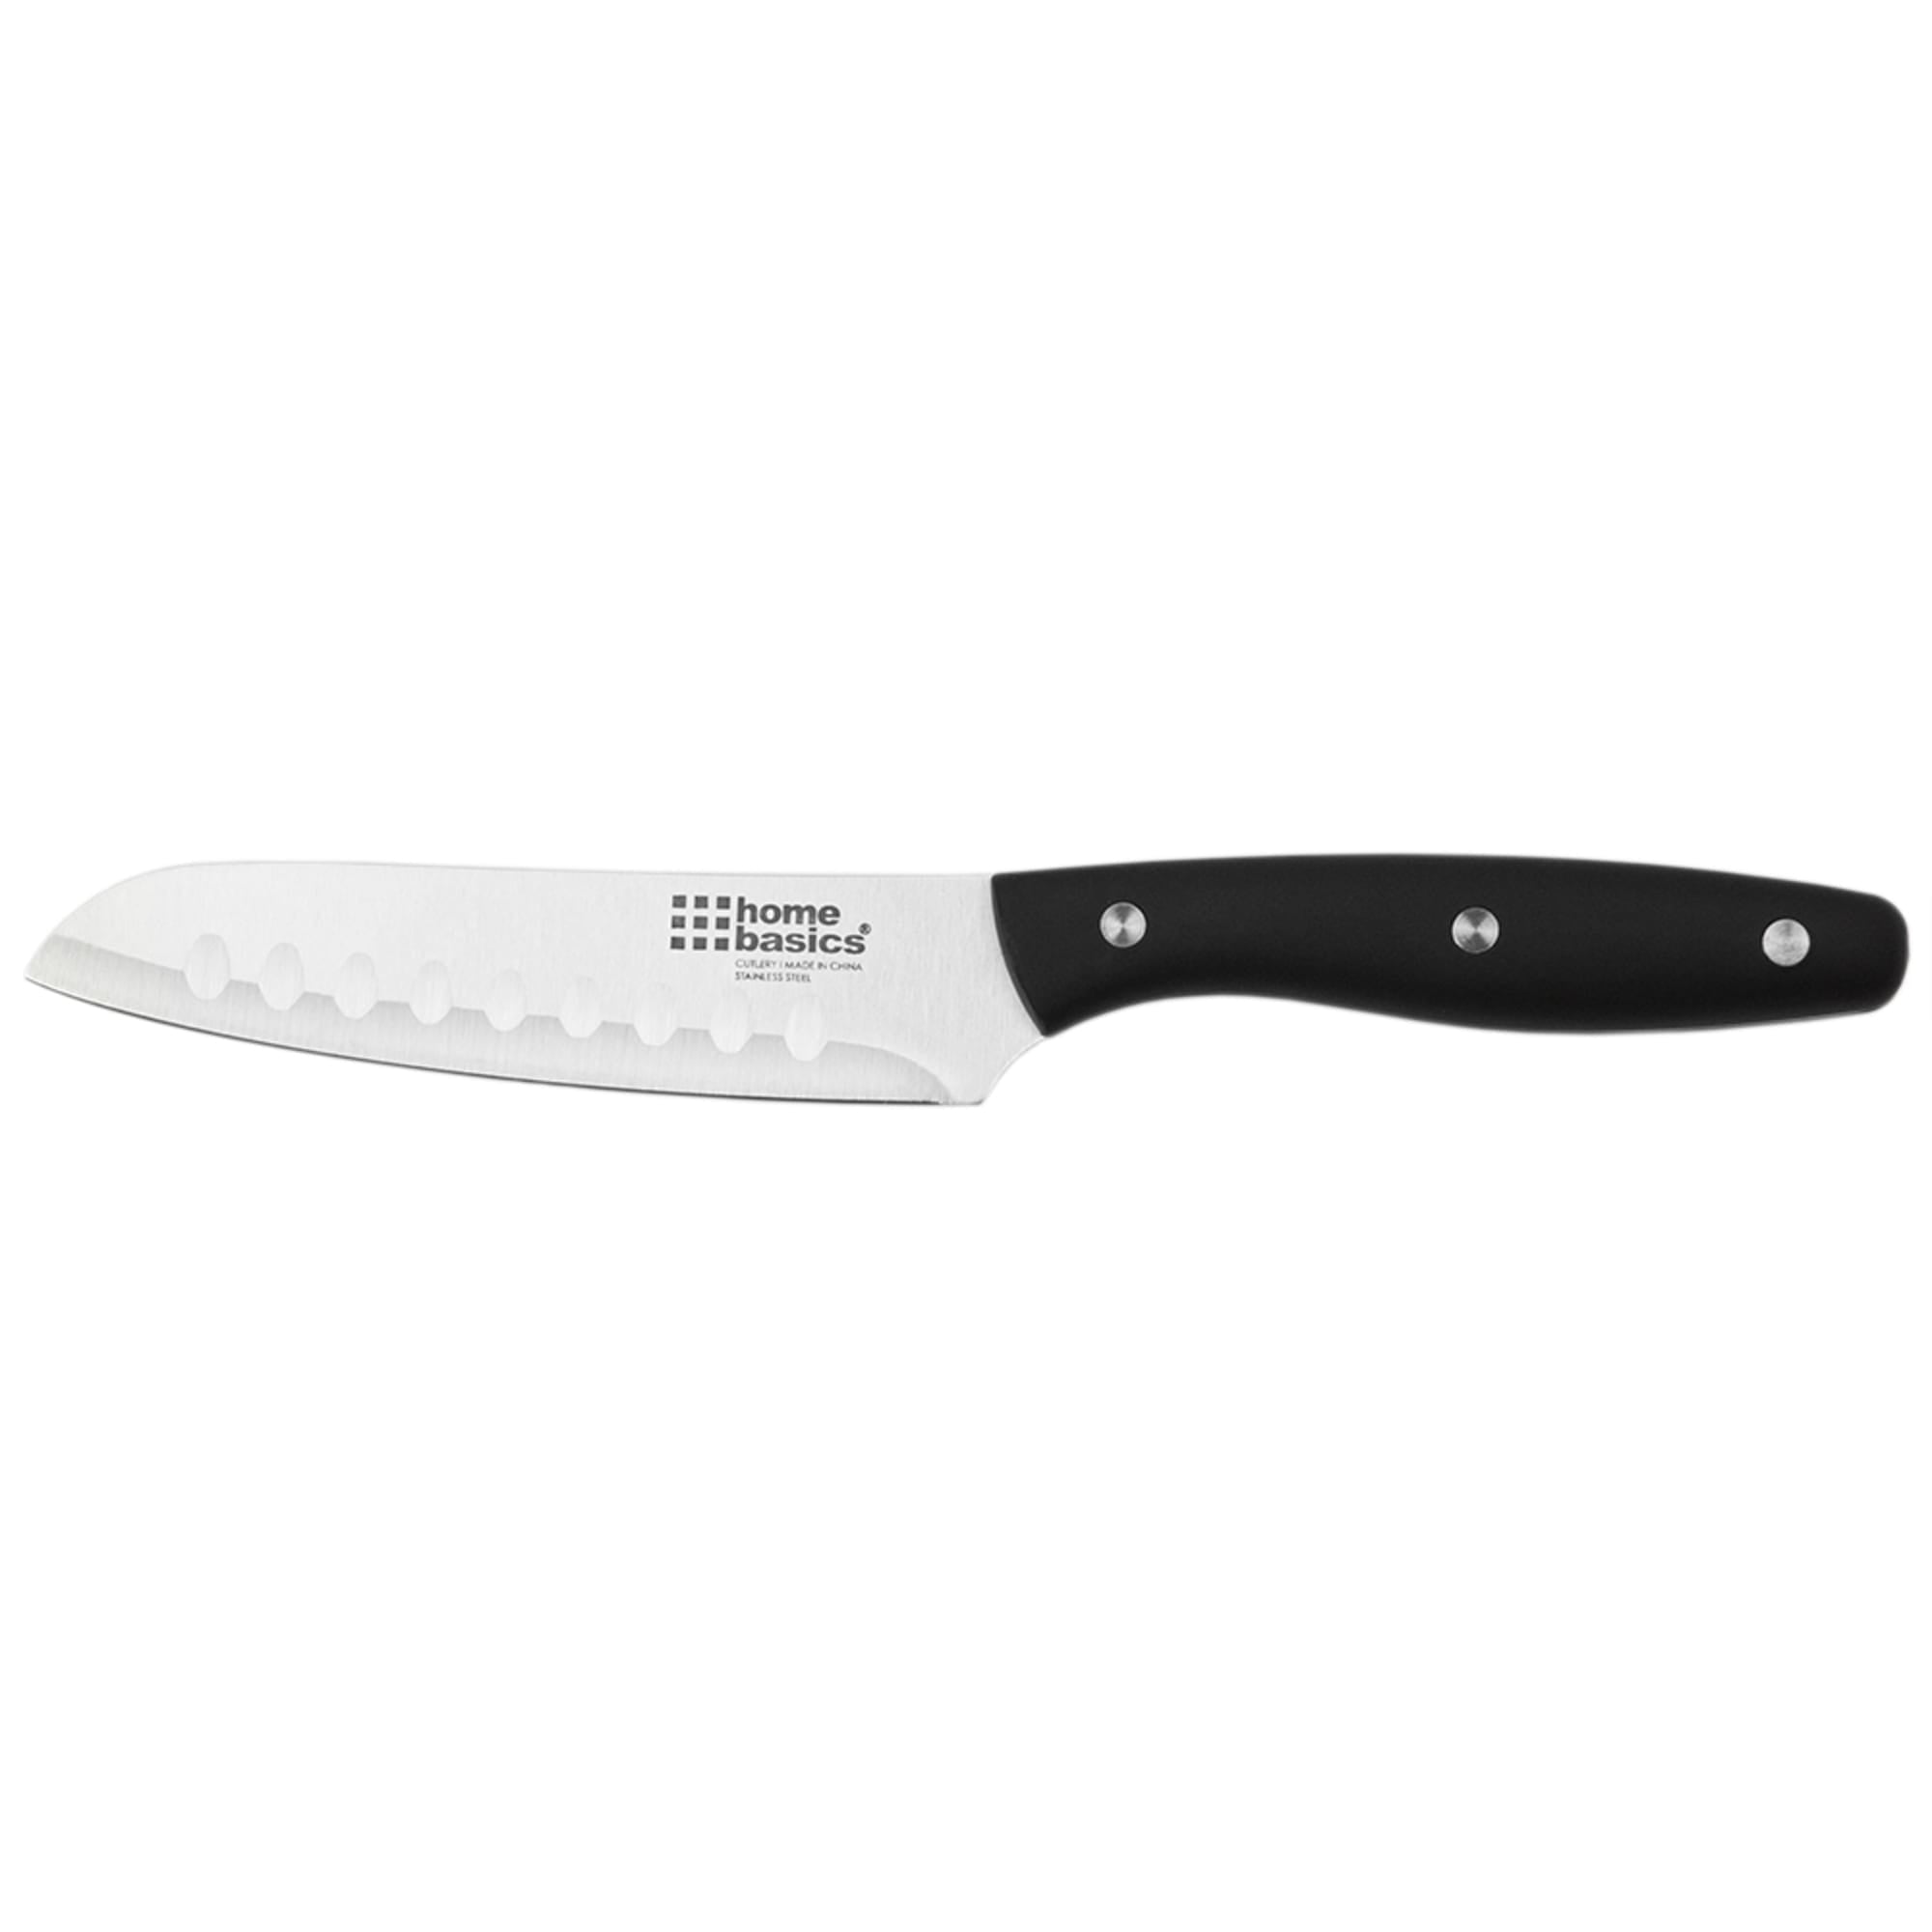 Home Basics 7" Santoku Knife $3.00 EACH, CASE PACK OF 24